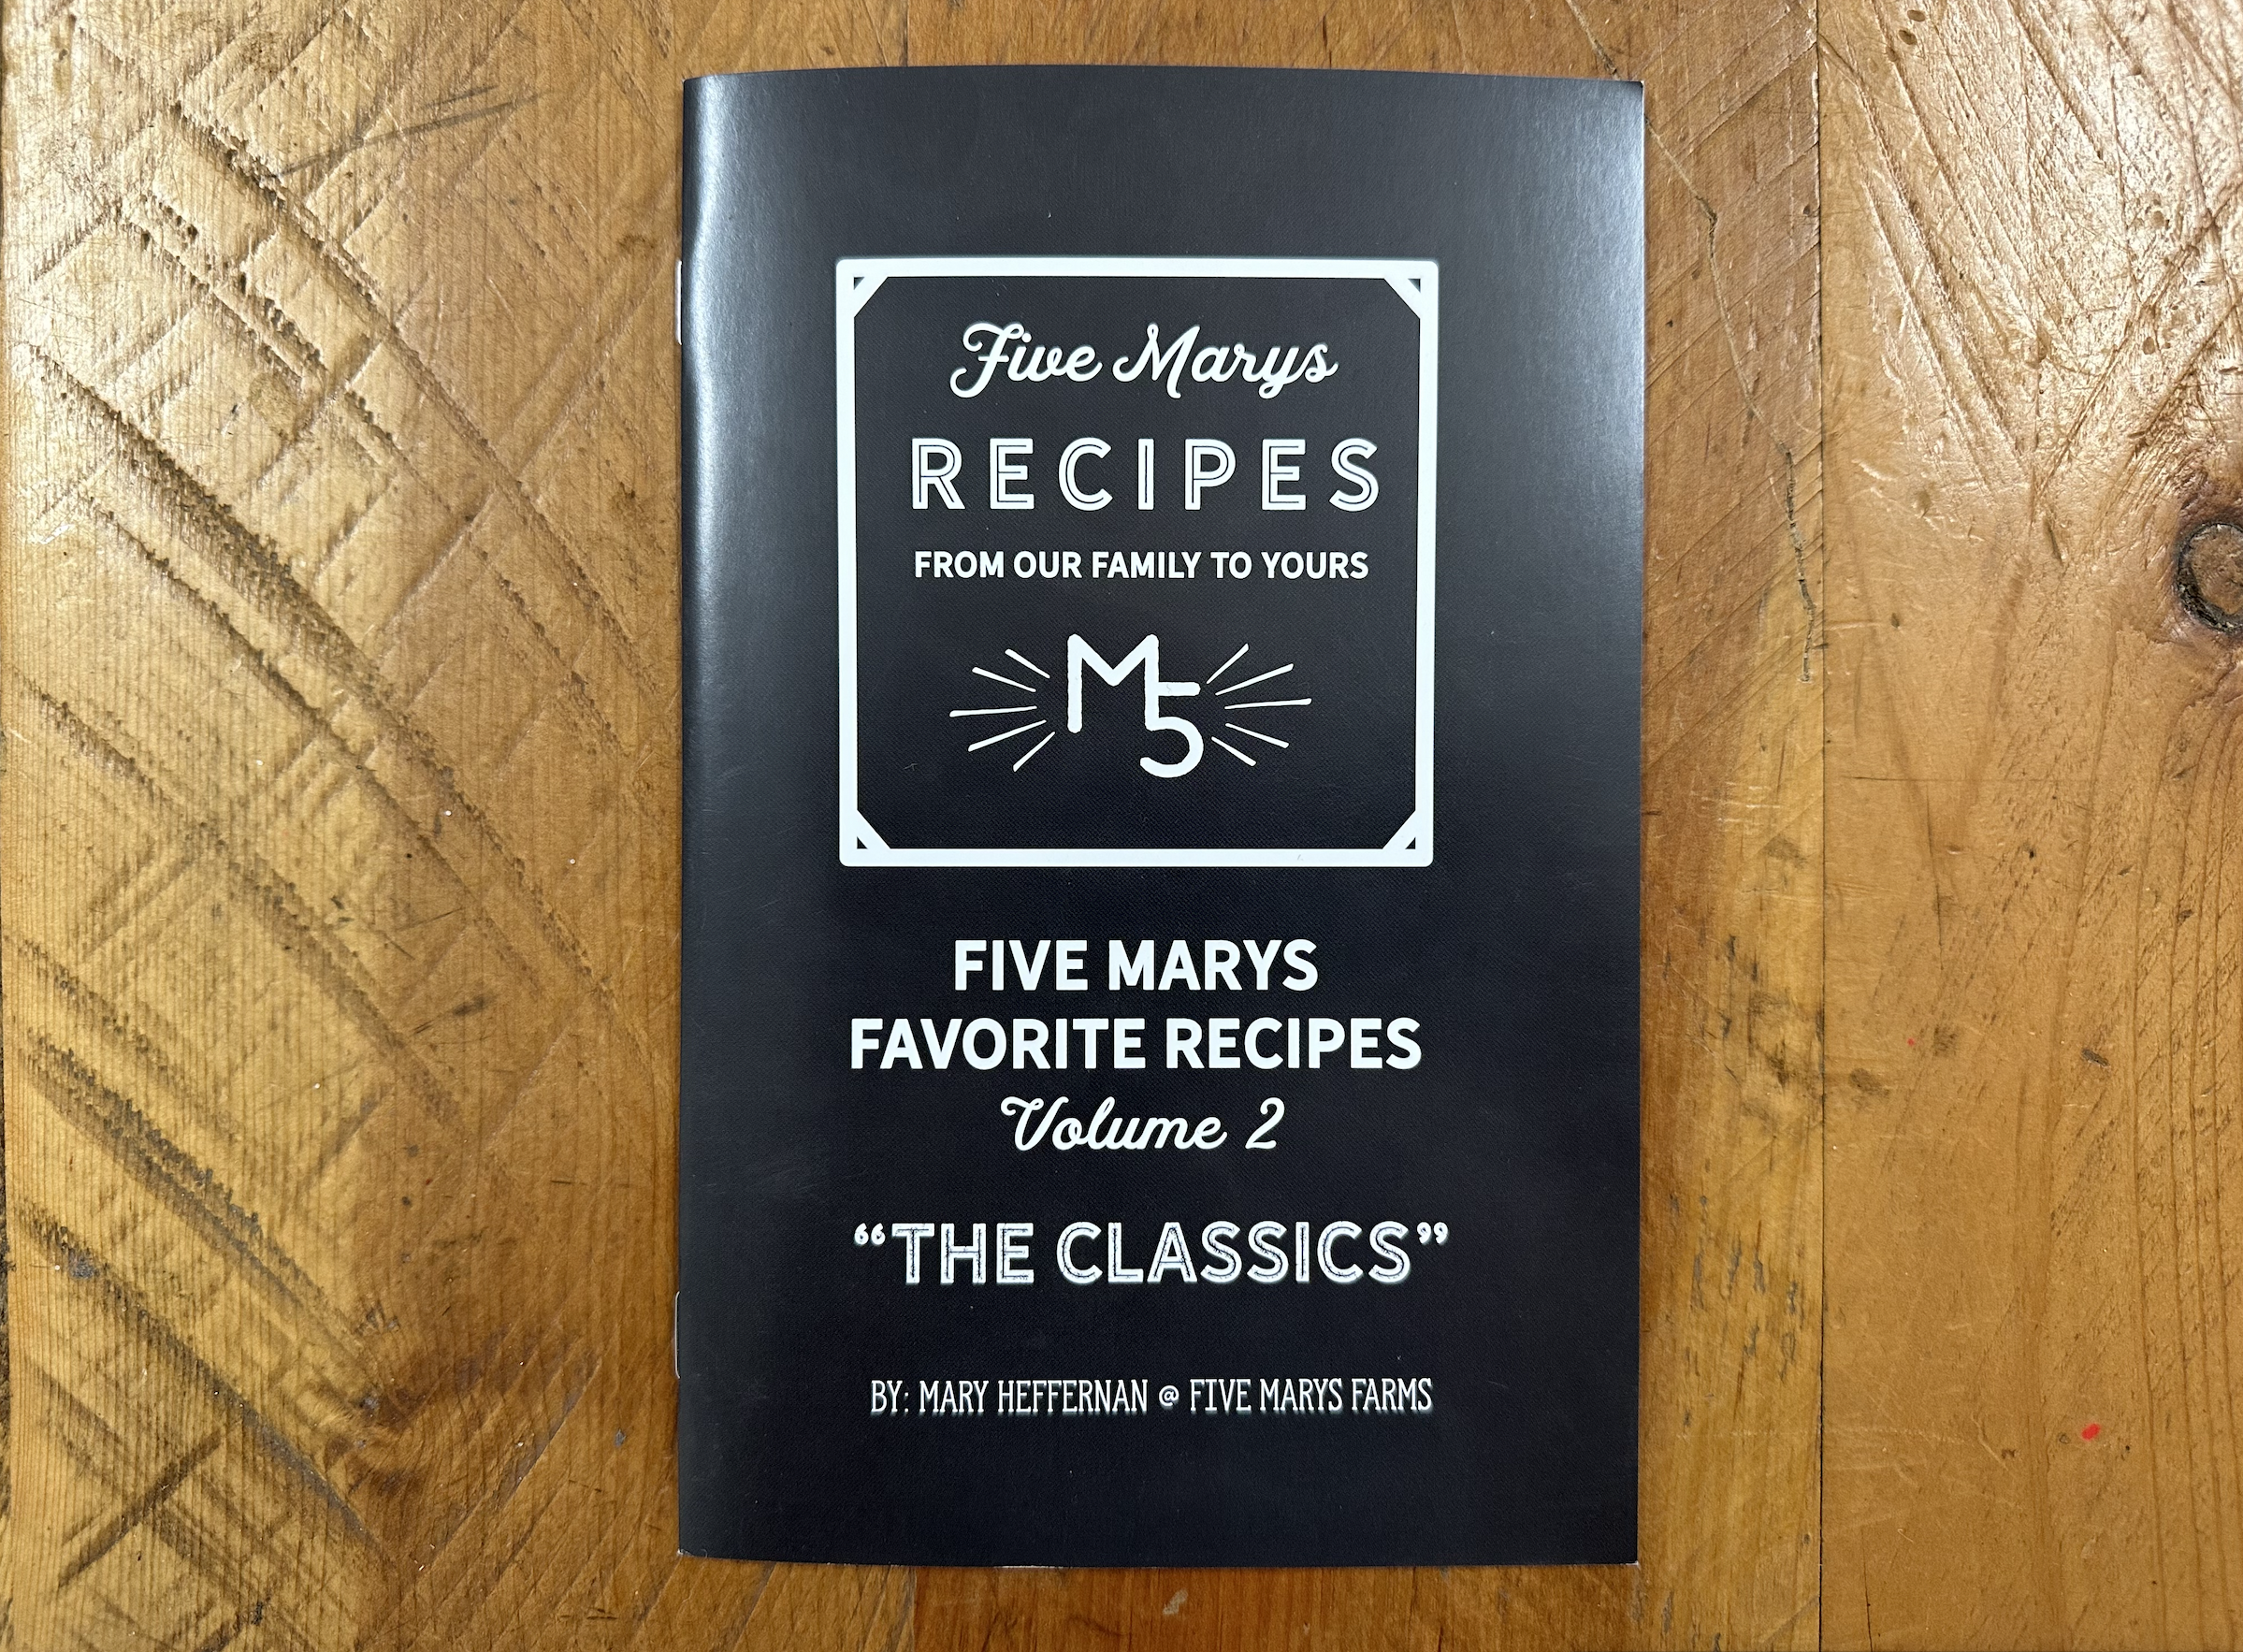 Our Family Recipes [Book]